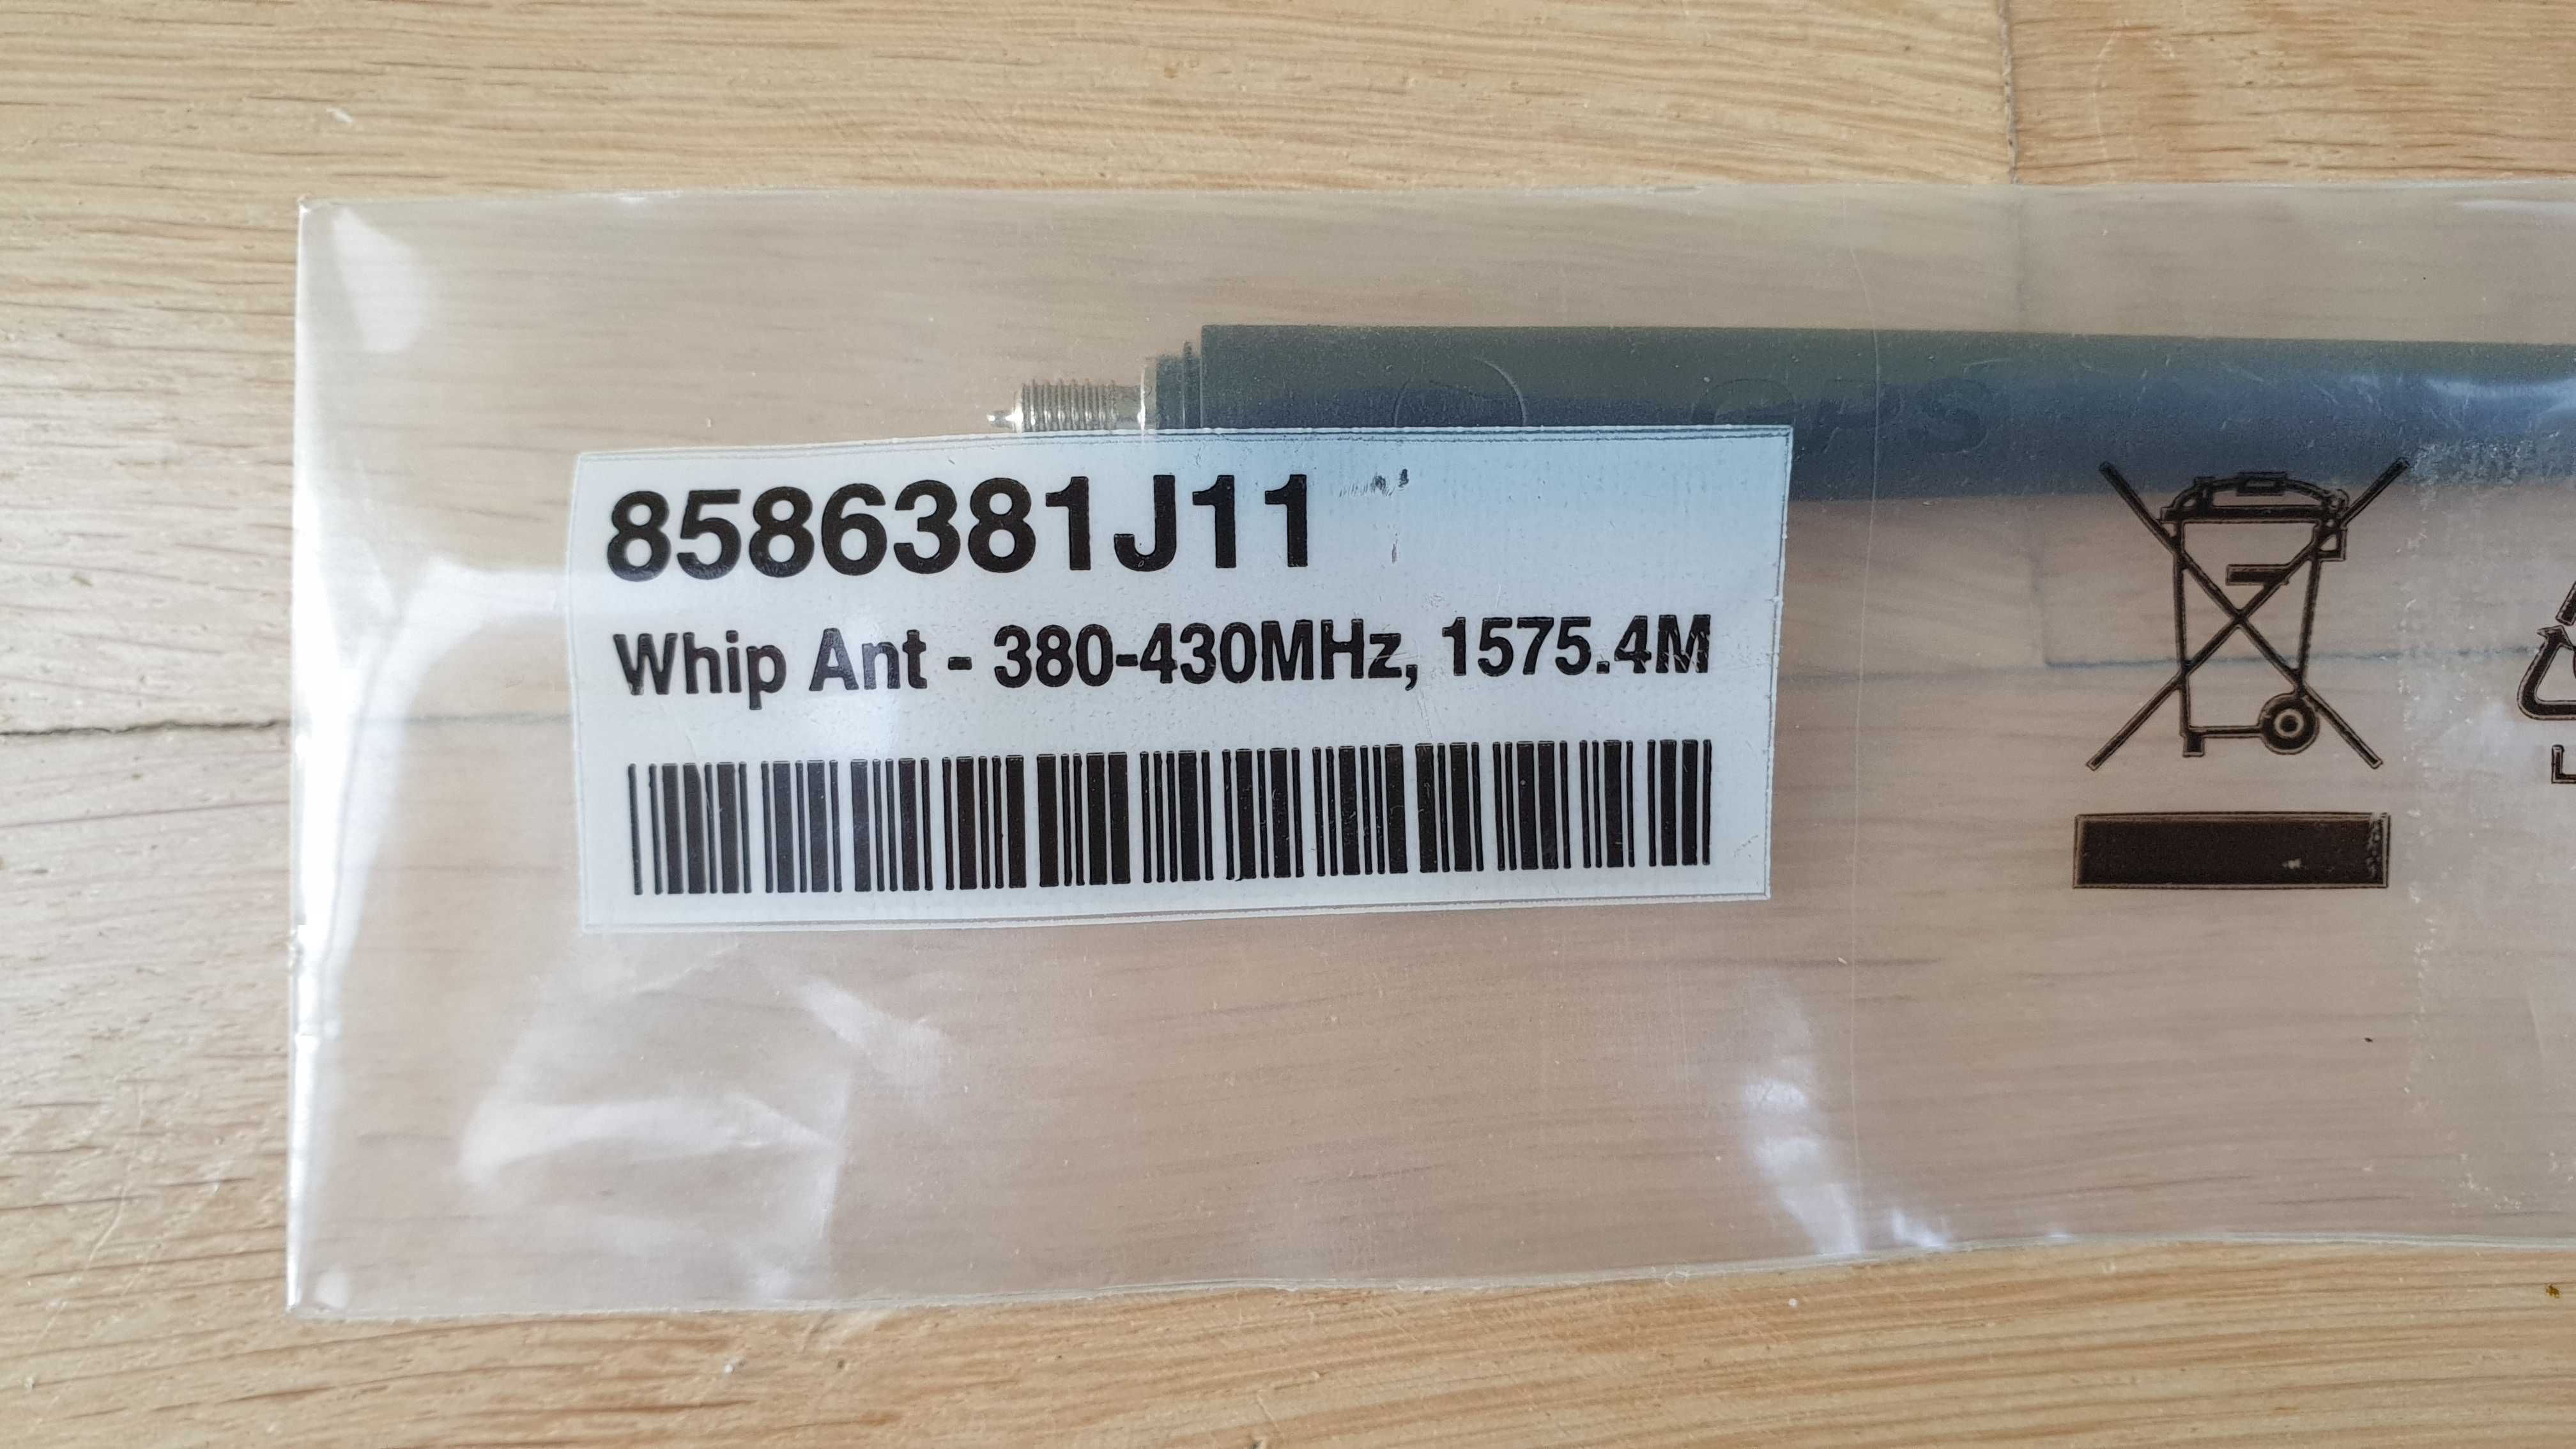 Antena biczowa Motorola Whip Ant 380 - 430 MHz, 1575.4M